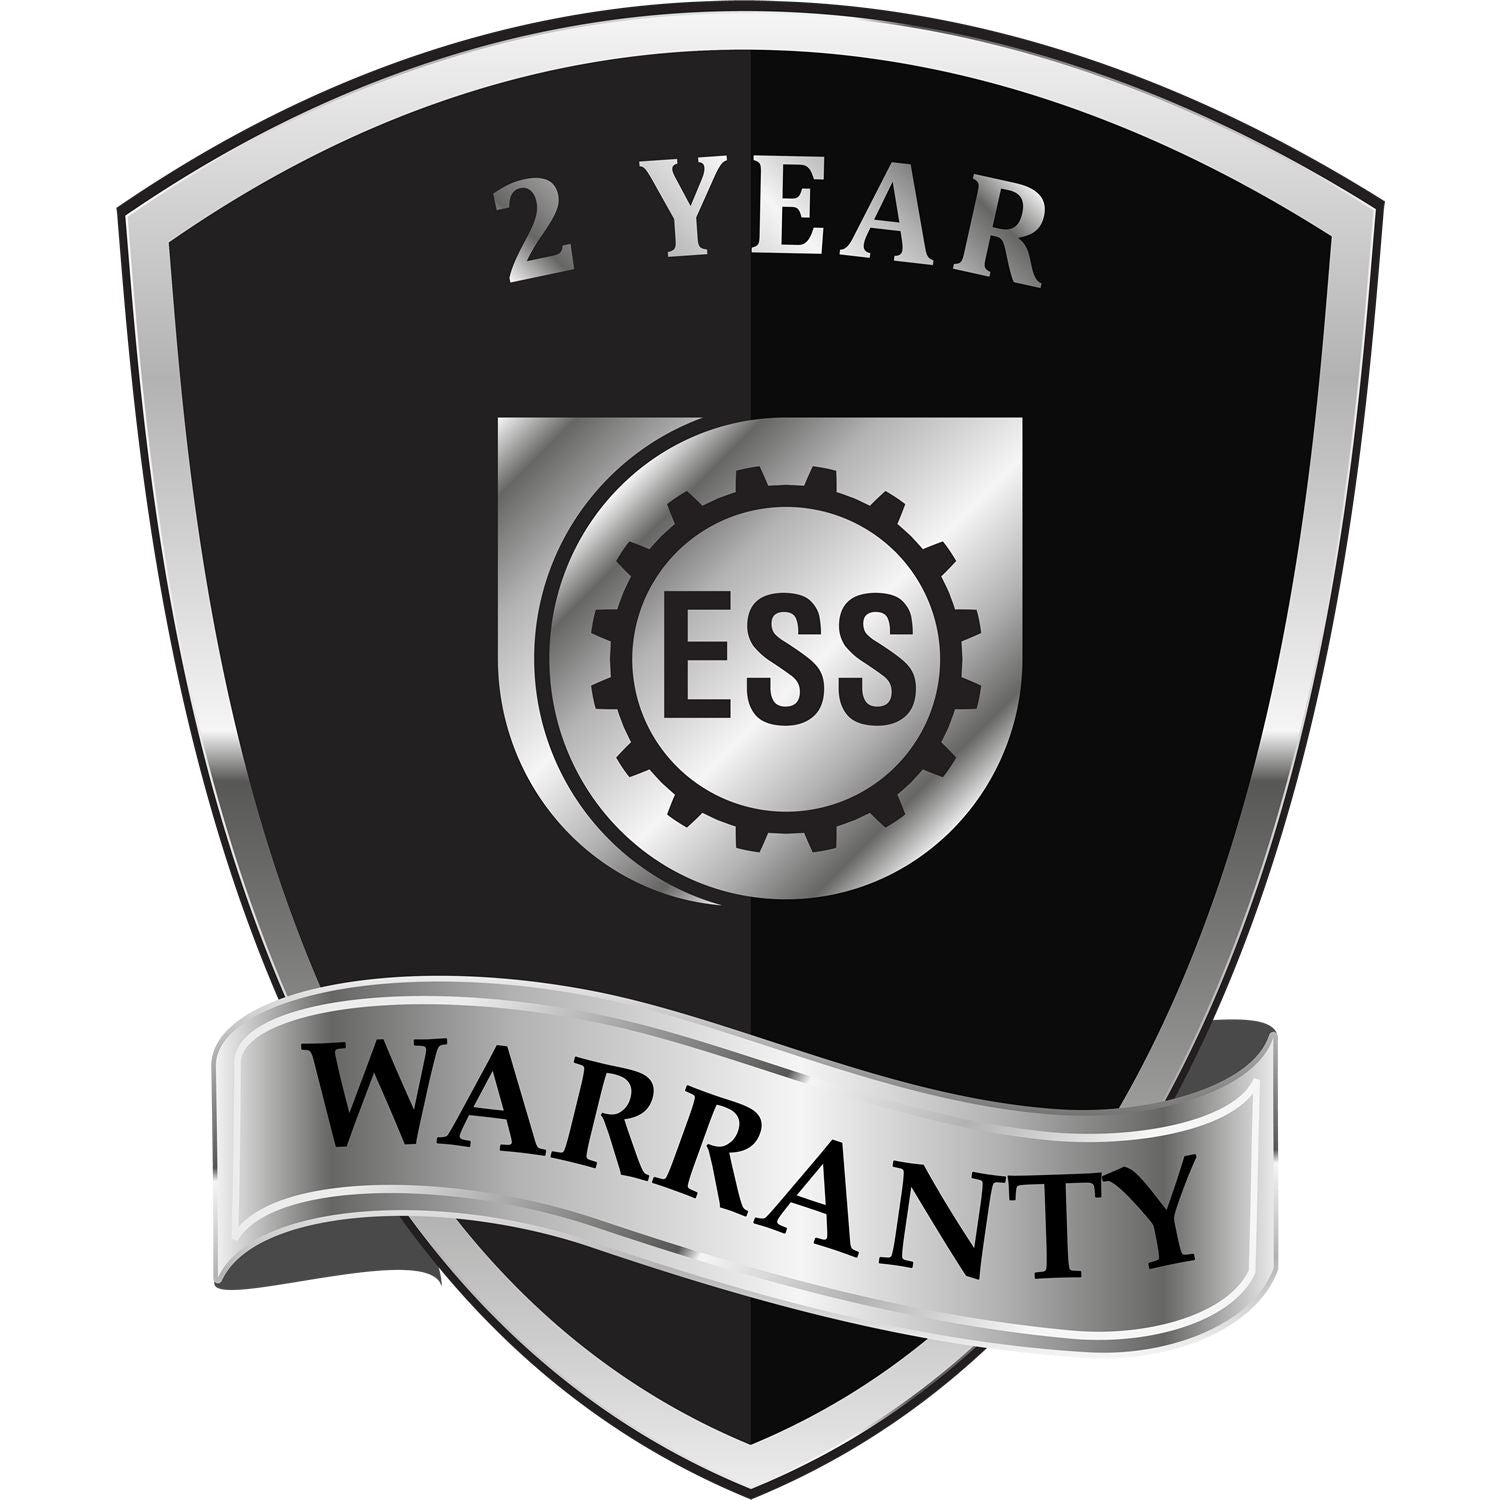 A black and silver badge or emblem showing warranty information for the Hybrid Oregon Engineer Seal